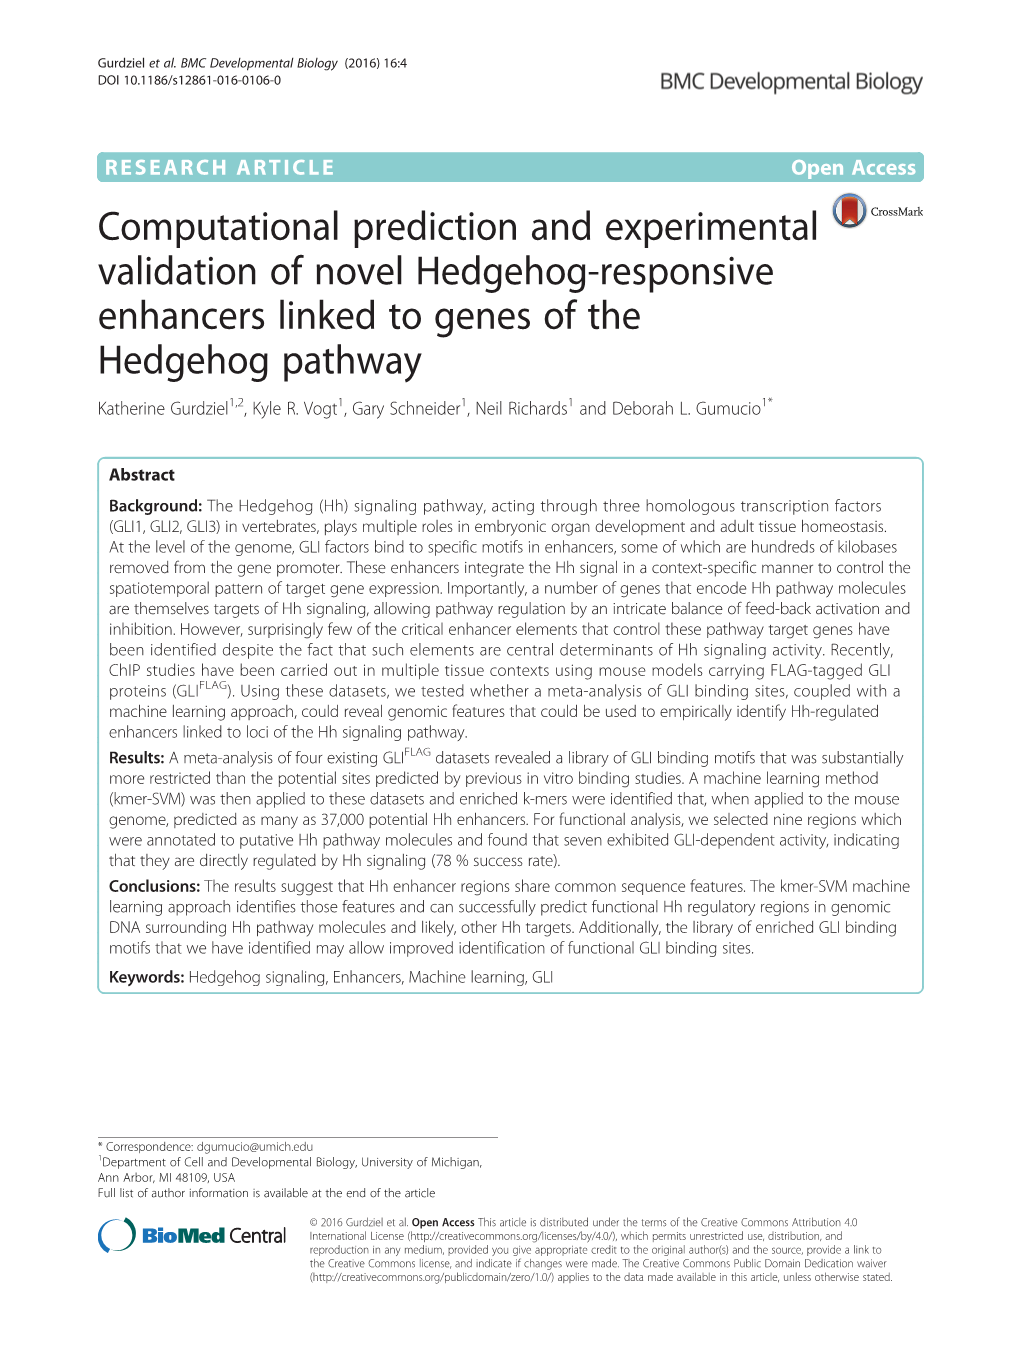 Computational Prediction and Experimental Validation of Novel Hedgehog-Responsive Enhancers Linked to Genes of the Hedgehog Pathway Katherine Gurdziel1,2, Kyle R